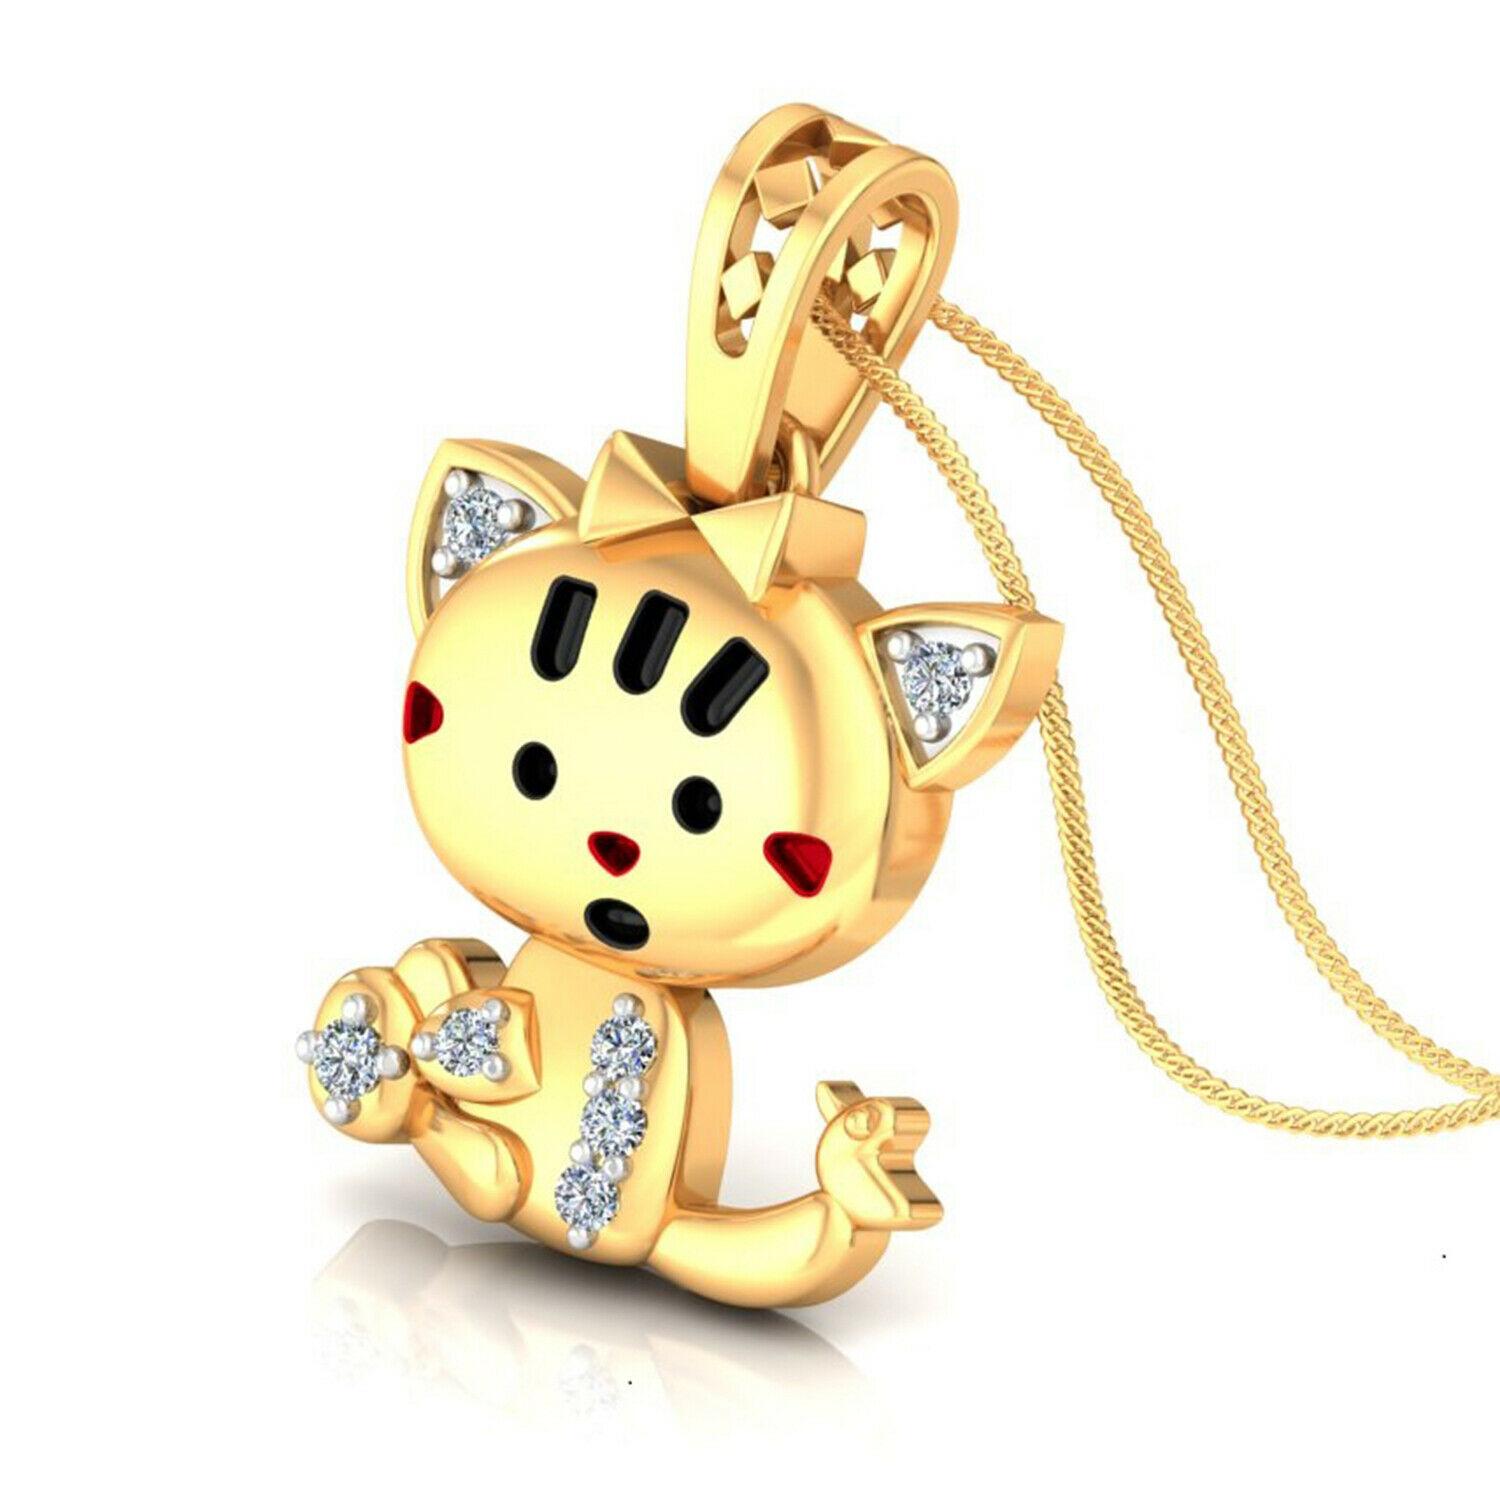 Taille mixte Collier pendentif breloque Hello Kitty en or 14 carats et émail avec diamants en vente